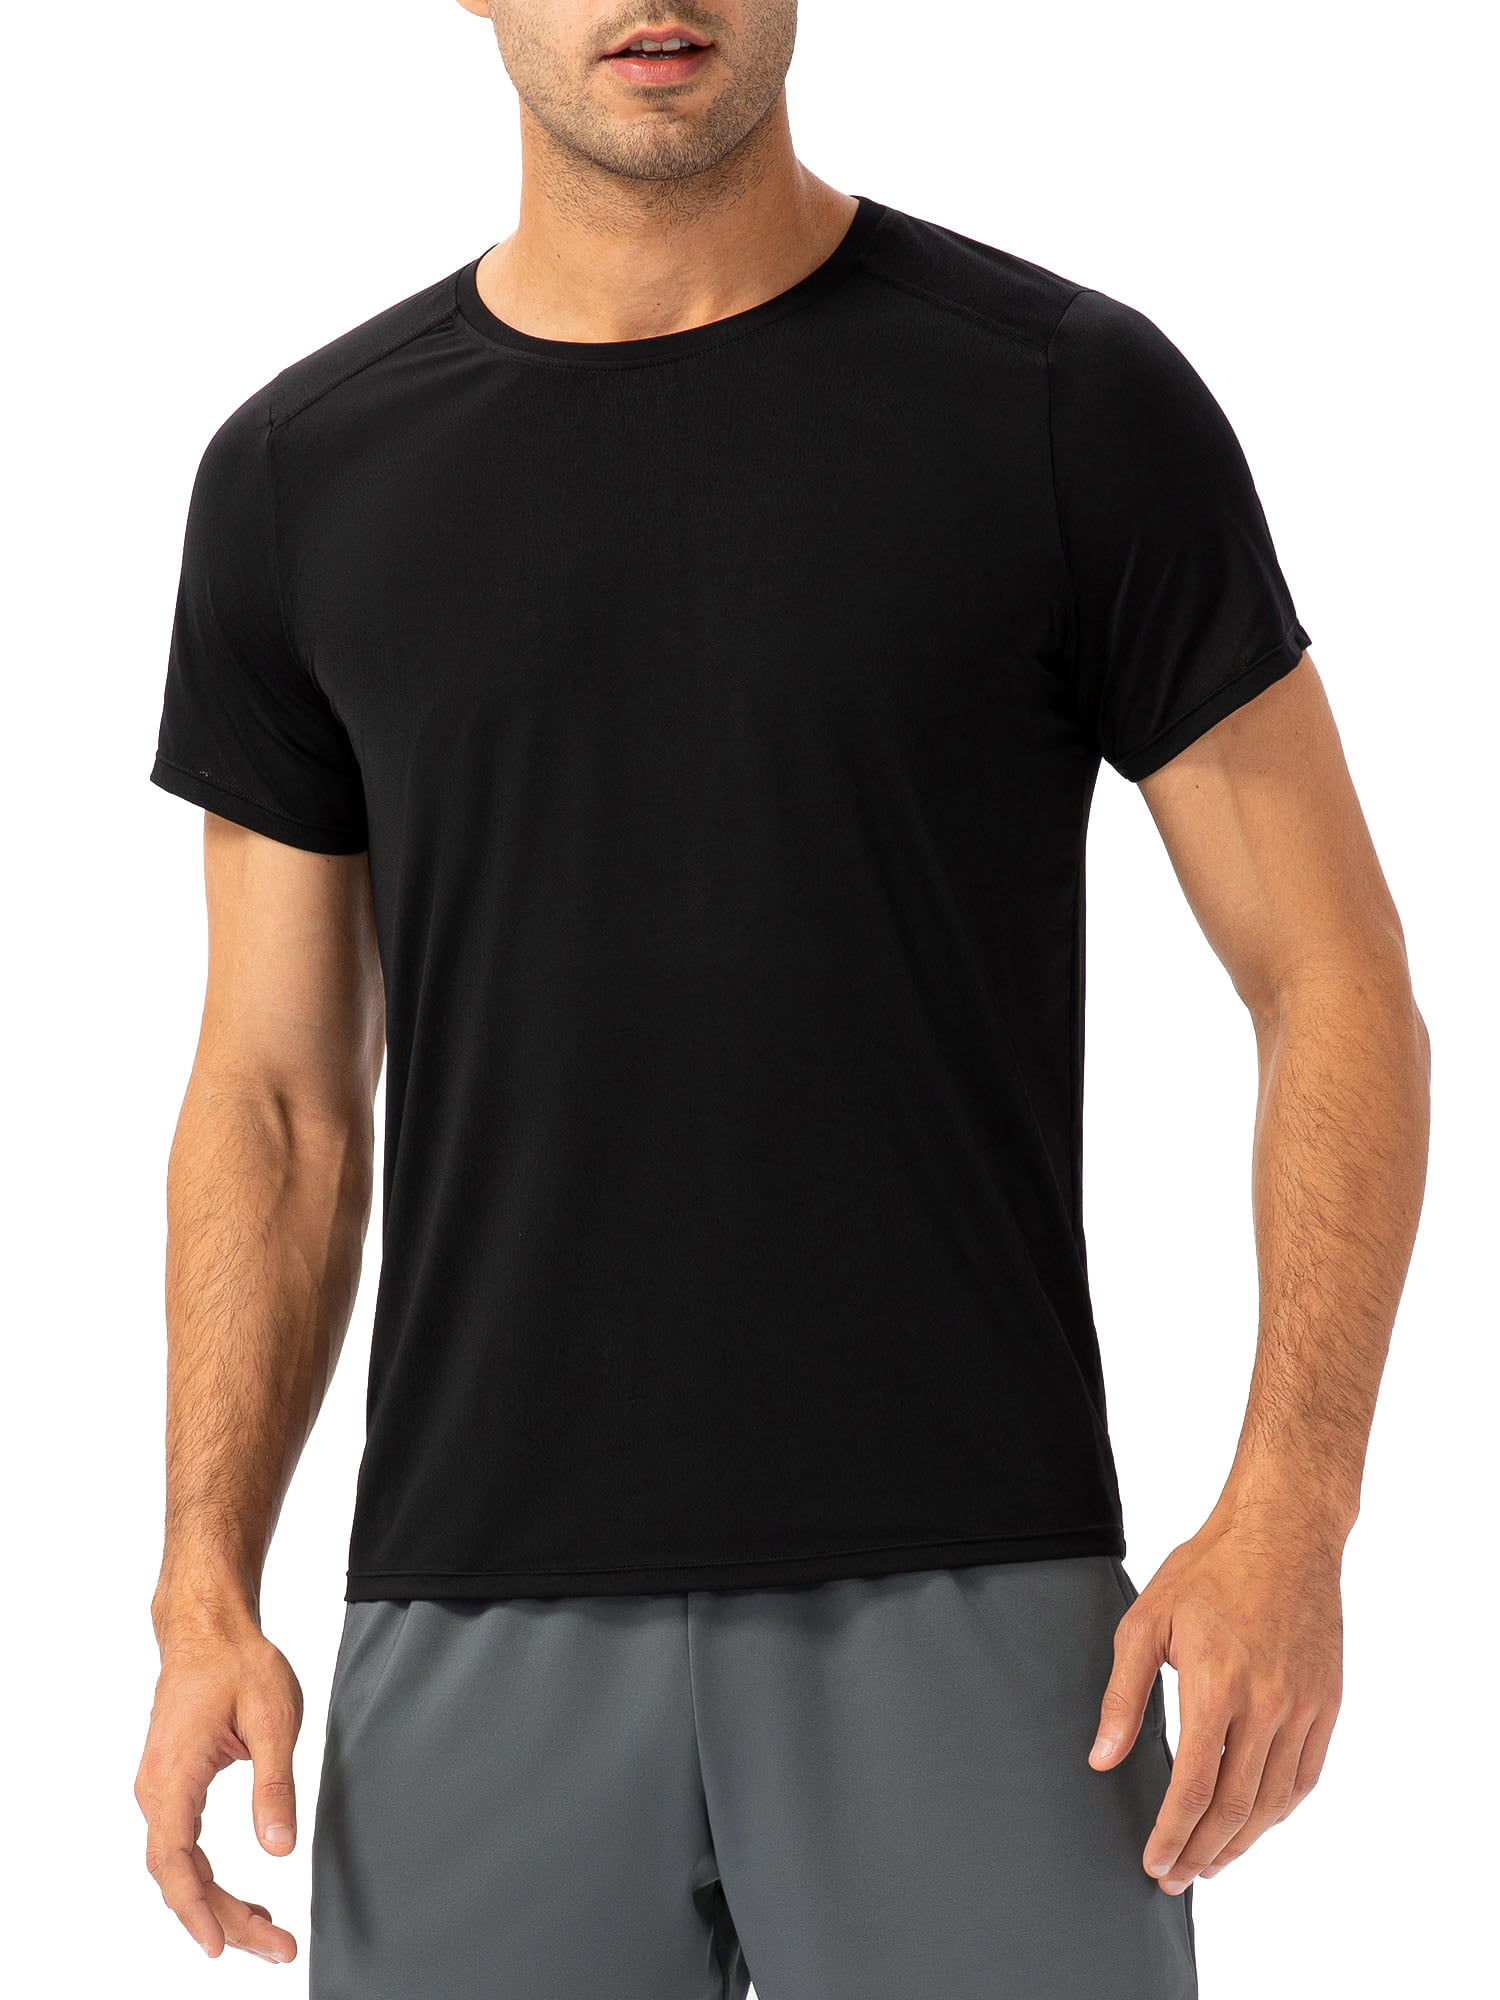 Carevas Men Sports T-shirt Short Sleeved Running Shirts Round Neck Fitness  Tops